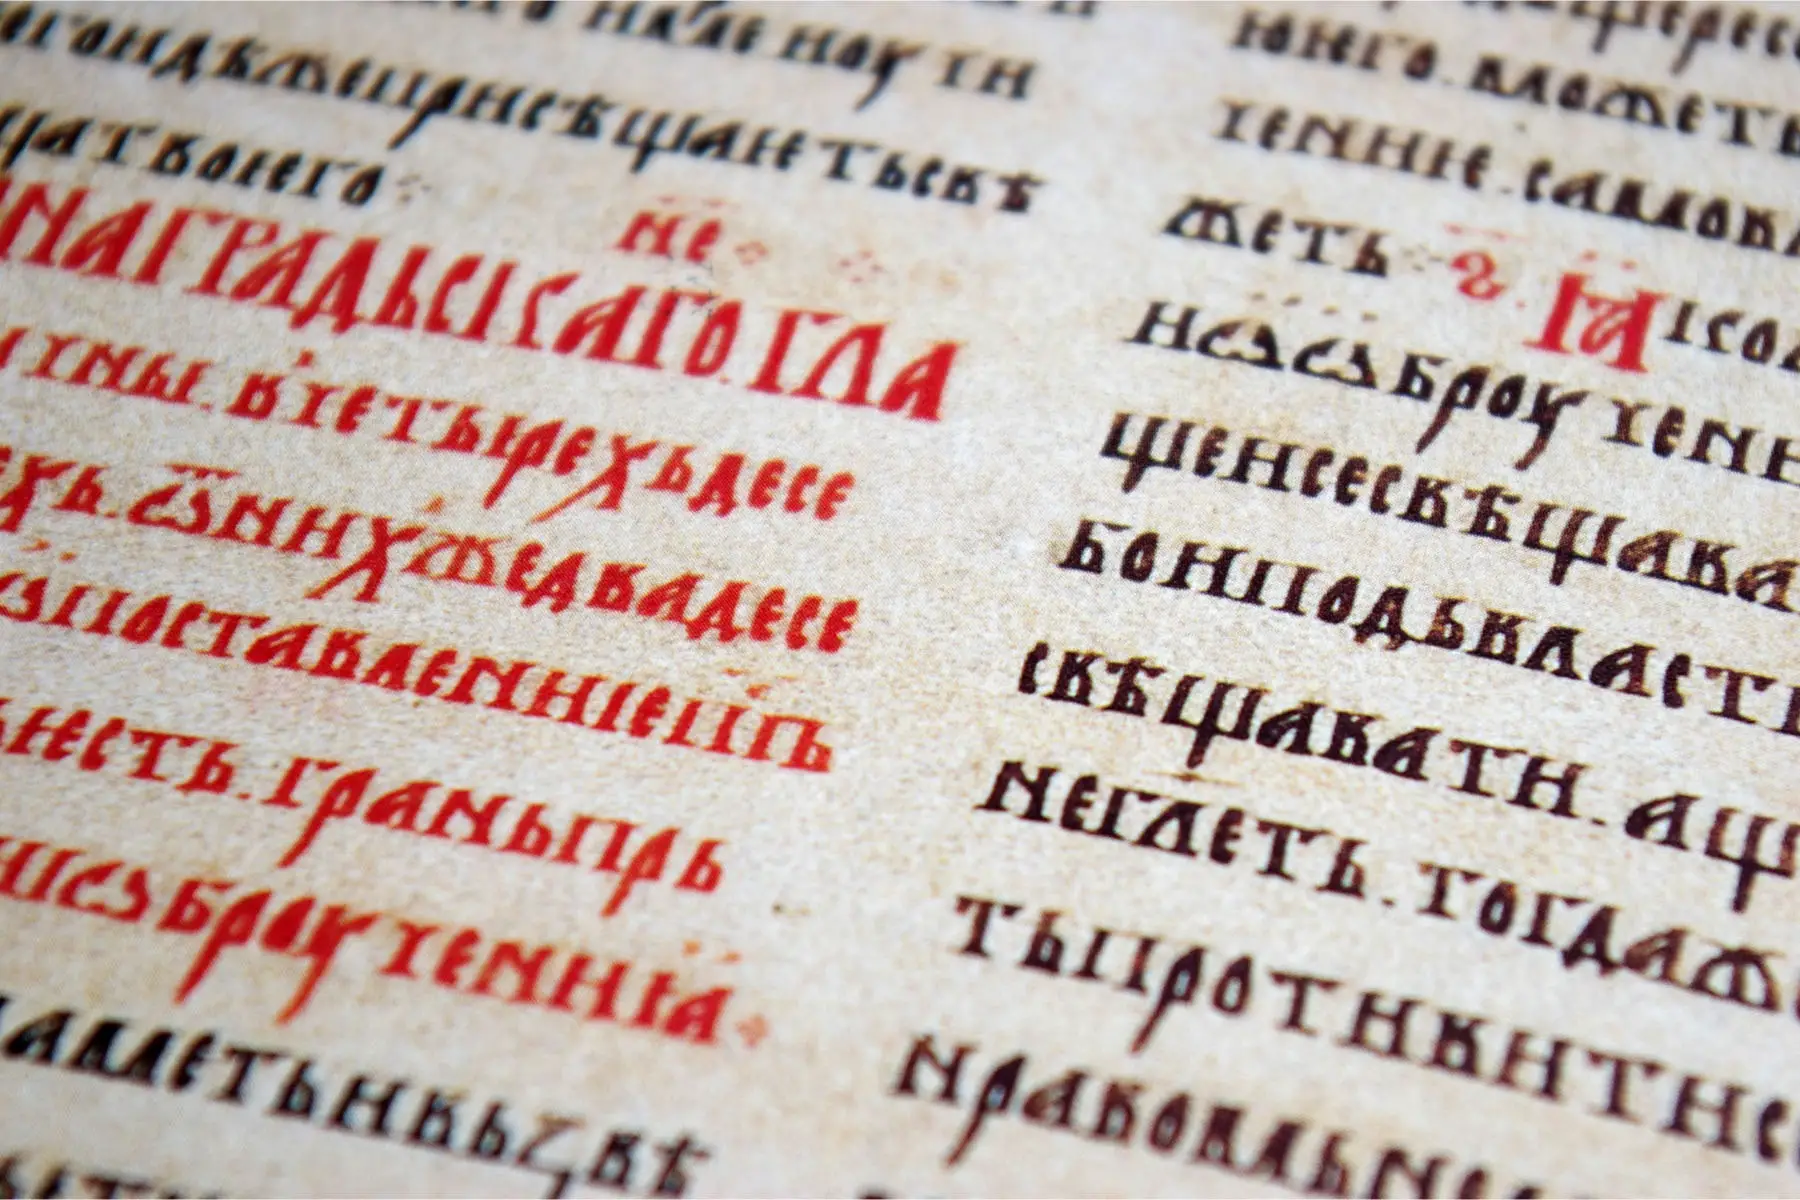 Russian language: origins in Old Church Slavonic